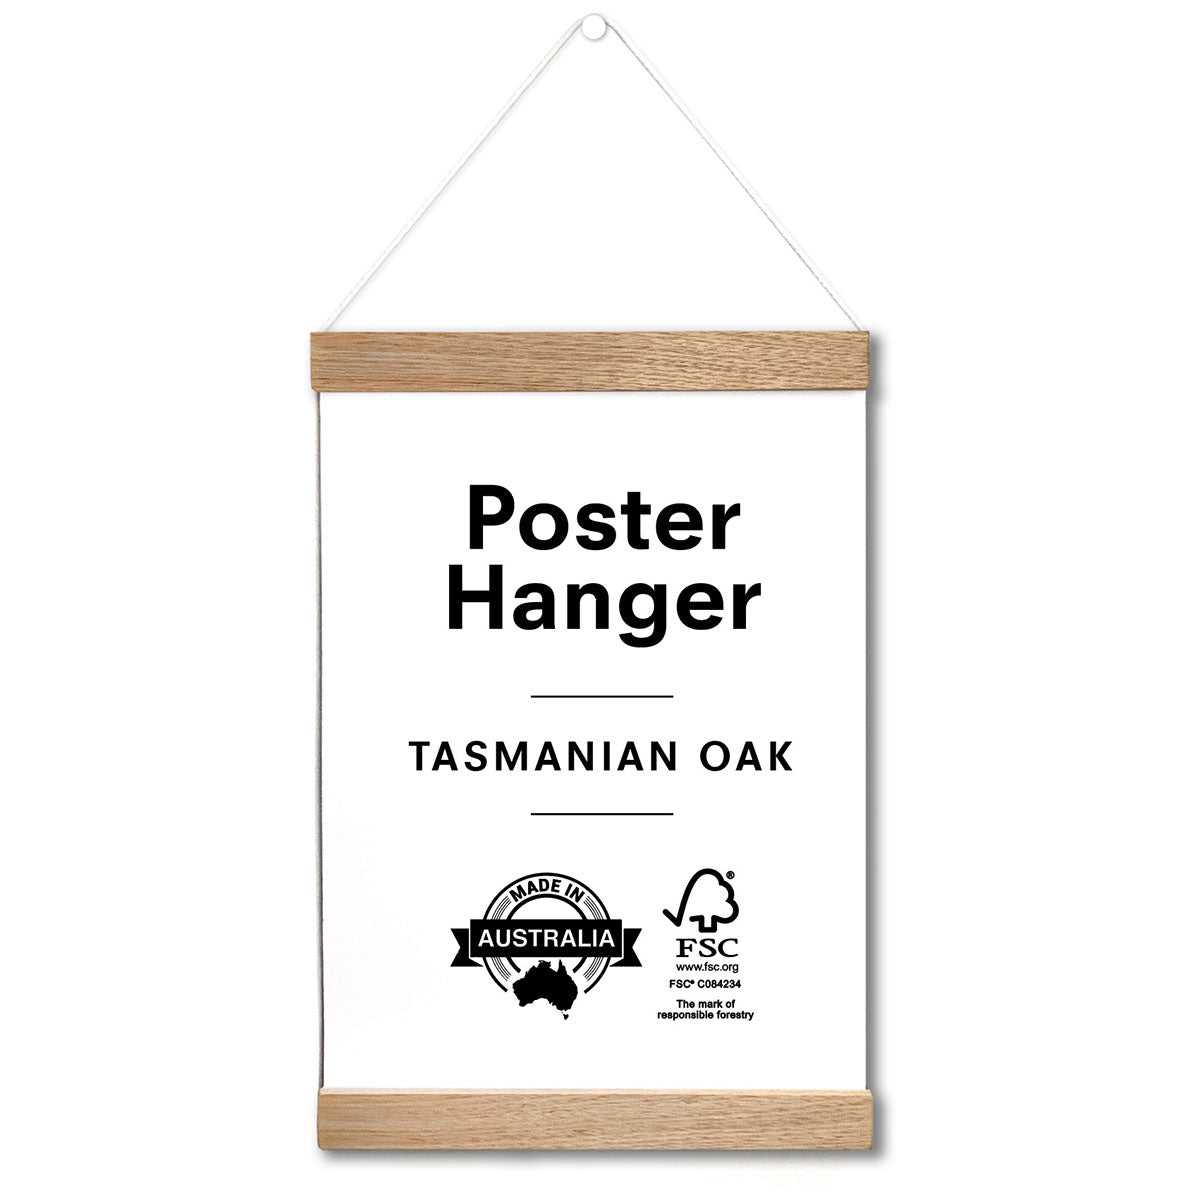 Poster hanger in Tasmanian Oak, Natural Oak Colour